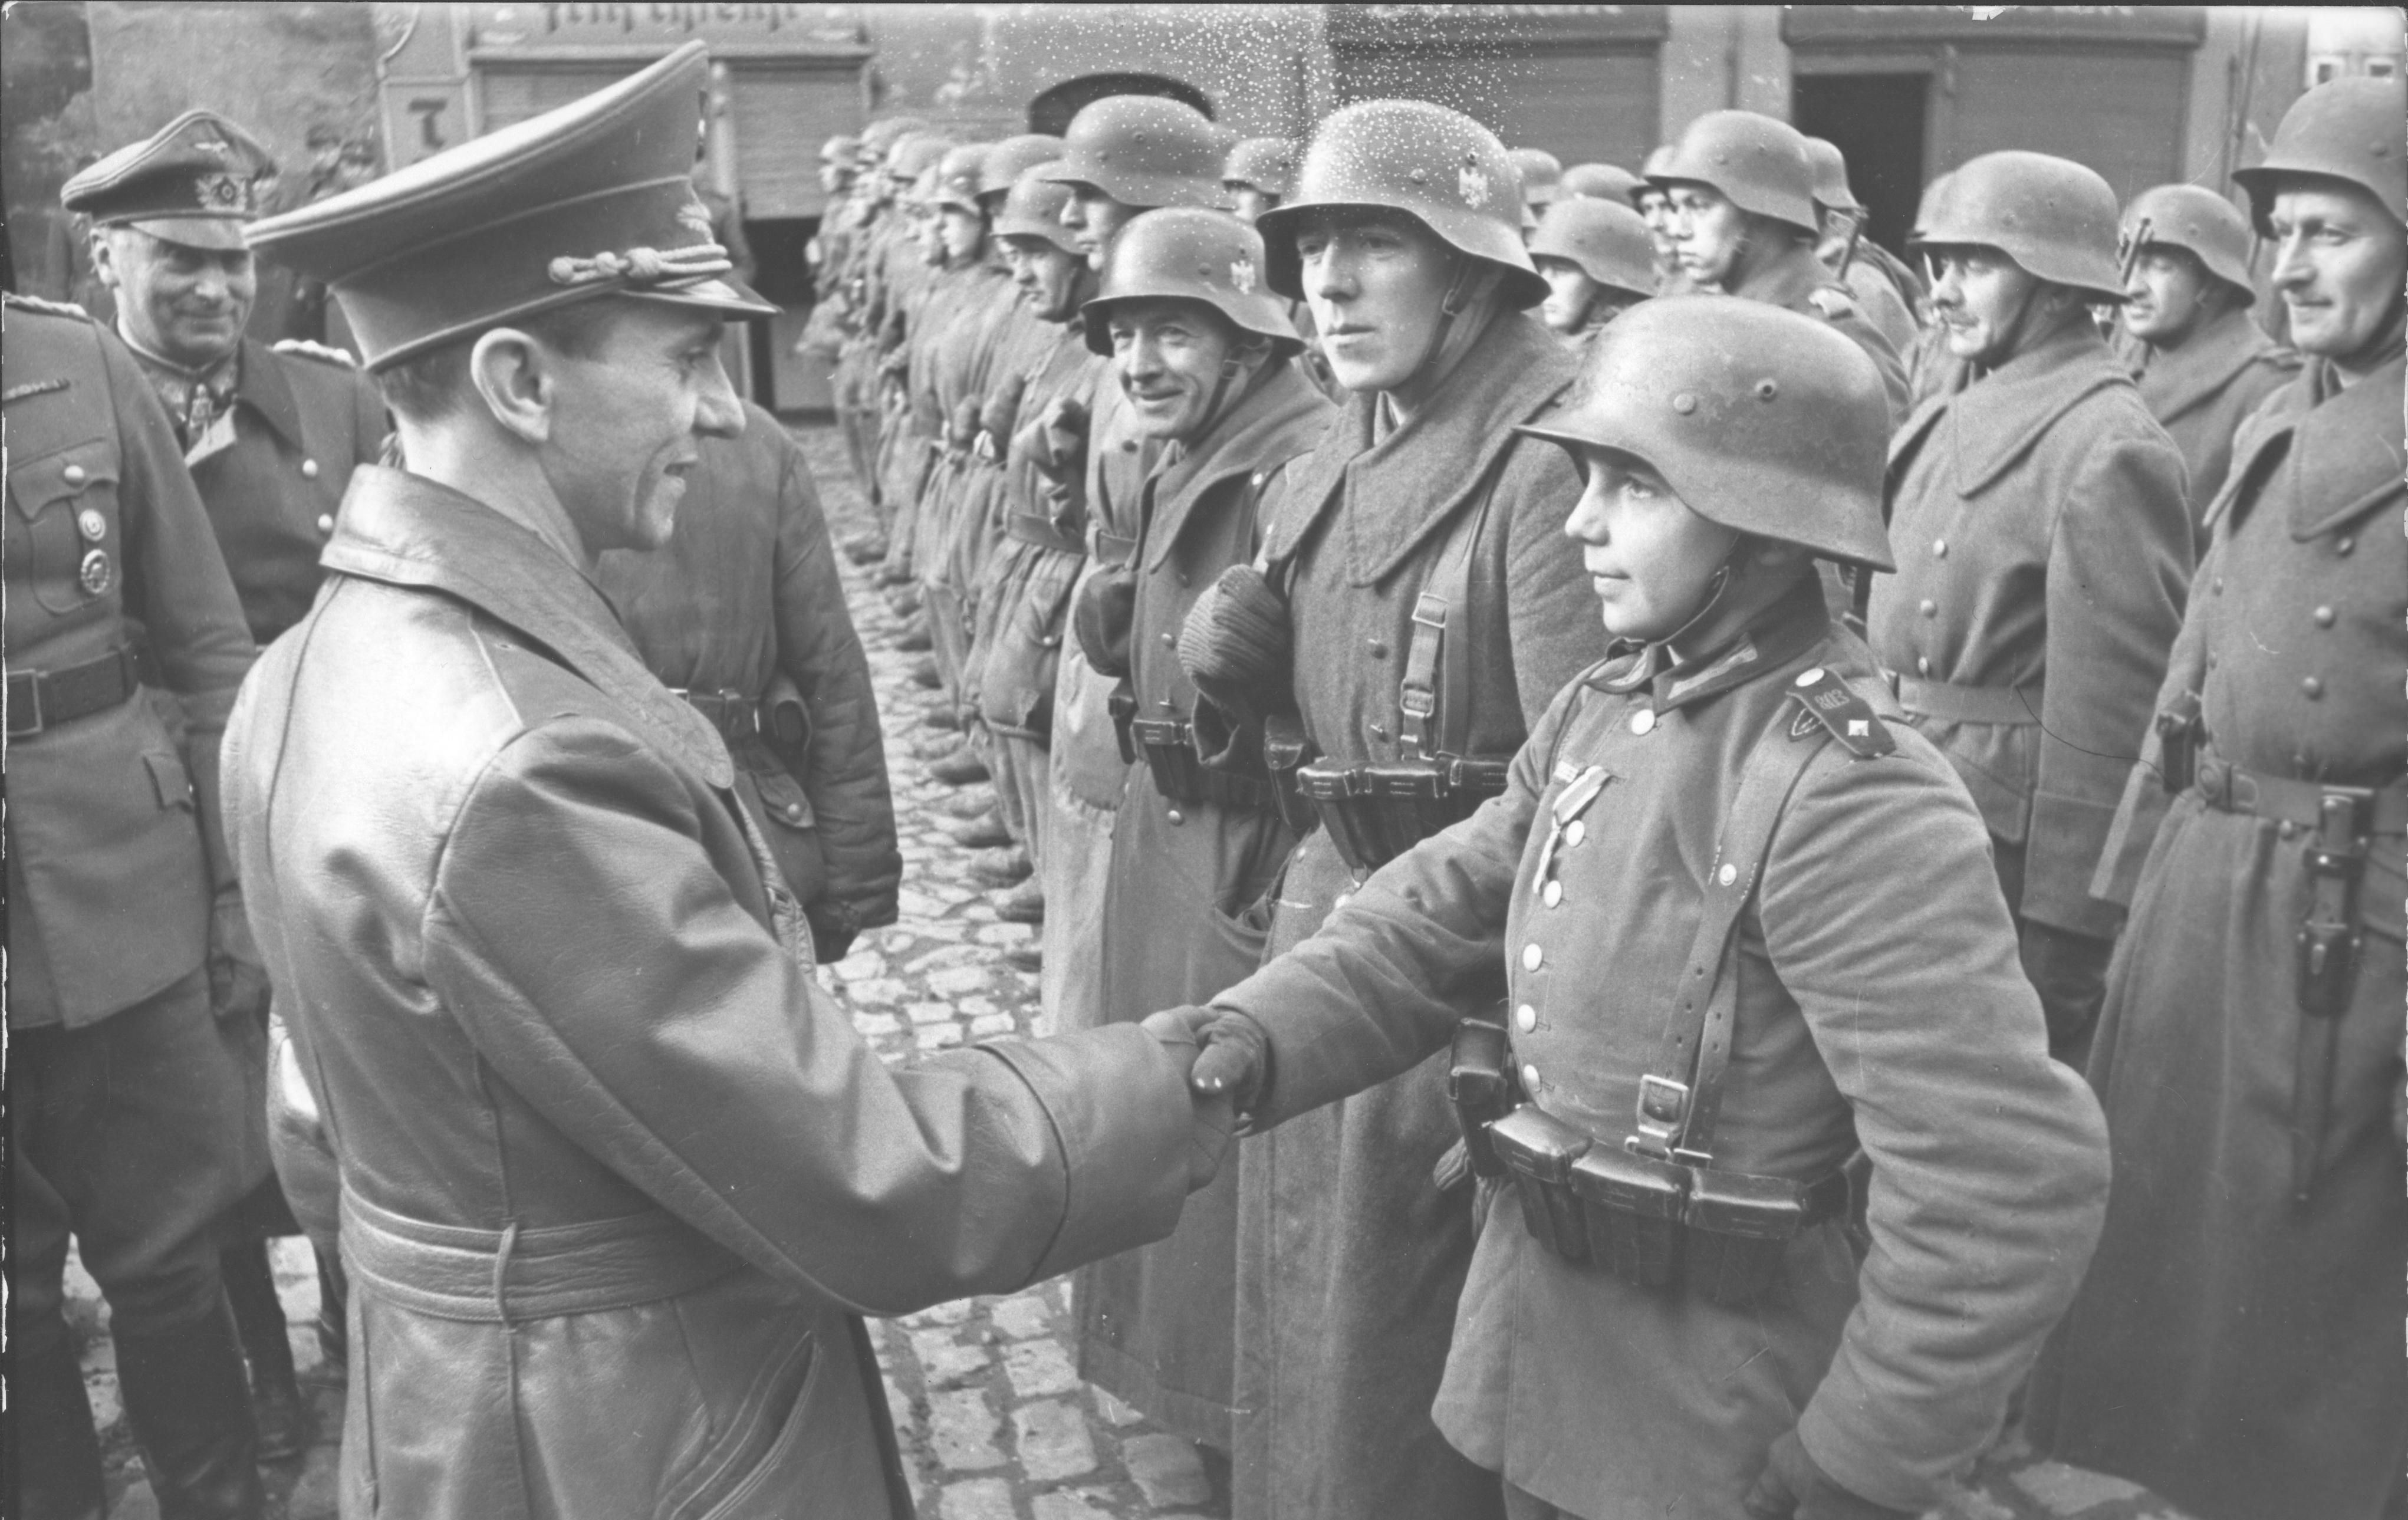 Мм в сс. Битва за Лаубан 1945. Фольксштурм Гитлерюгенд.